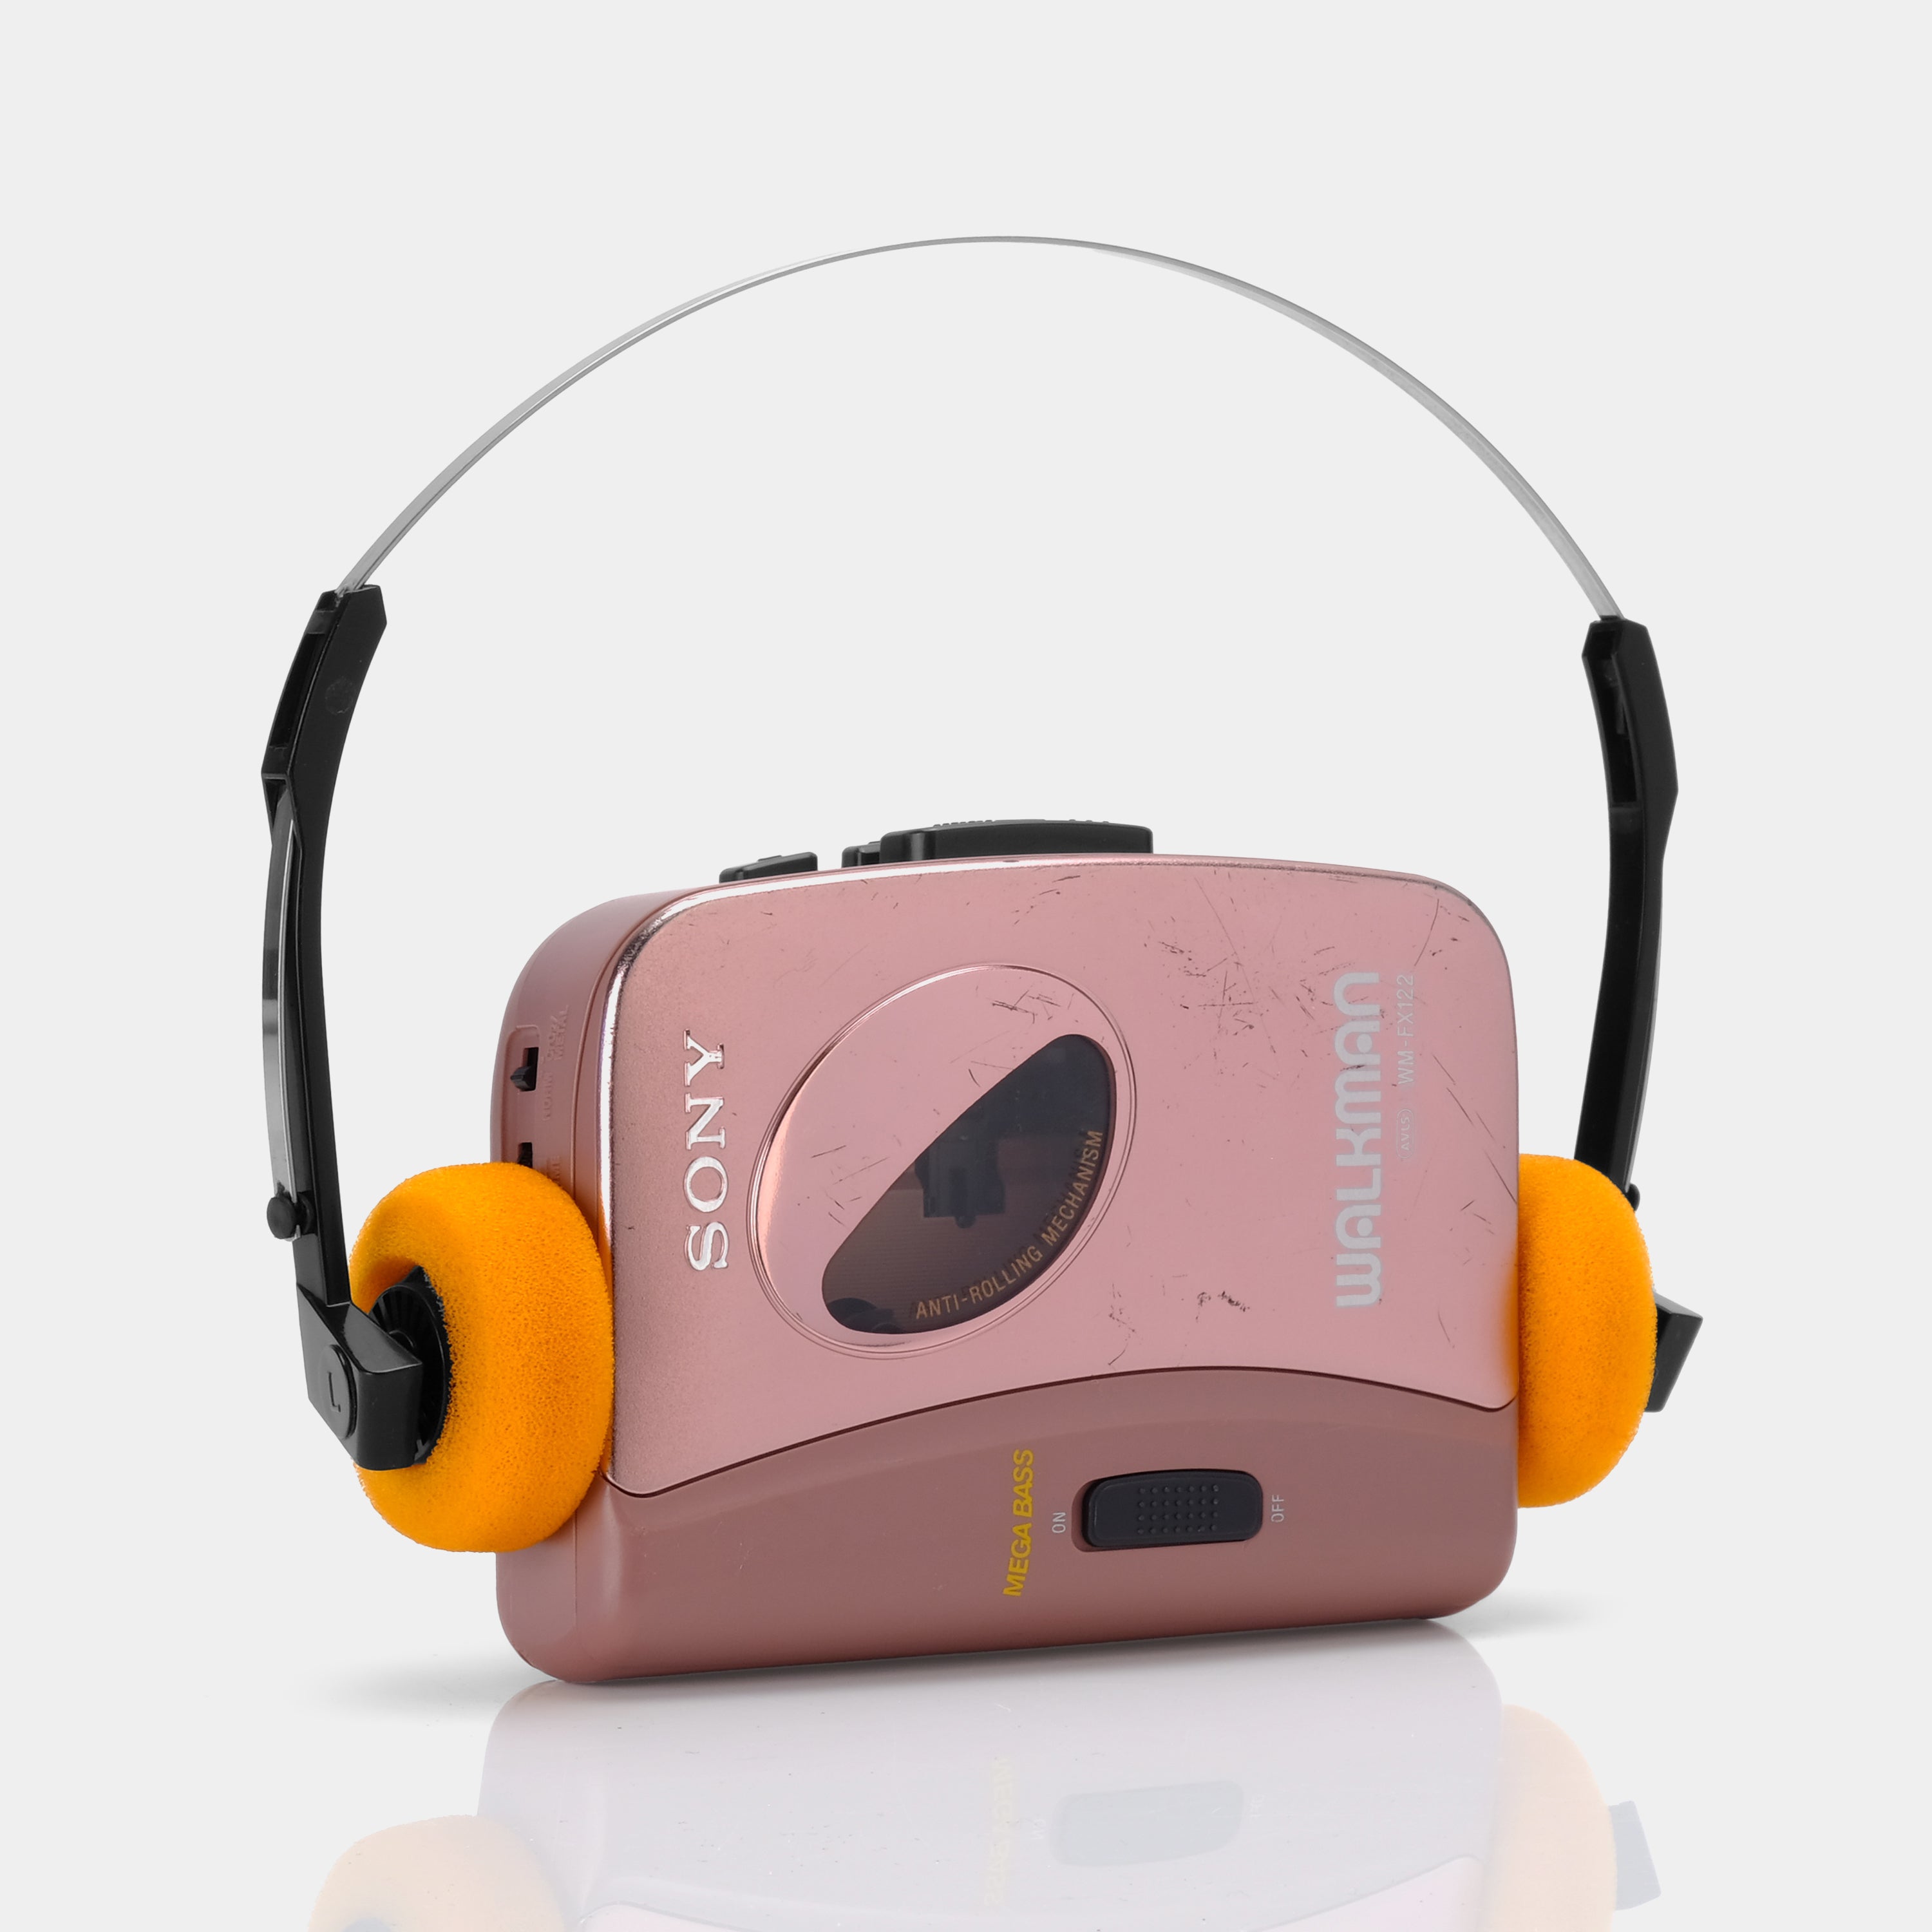 Sony Walkman WM-EX122 Pink Portable Cassette Player